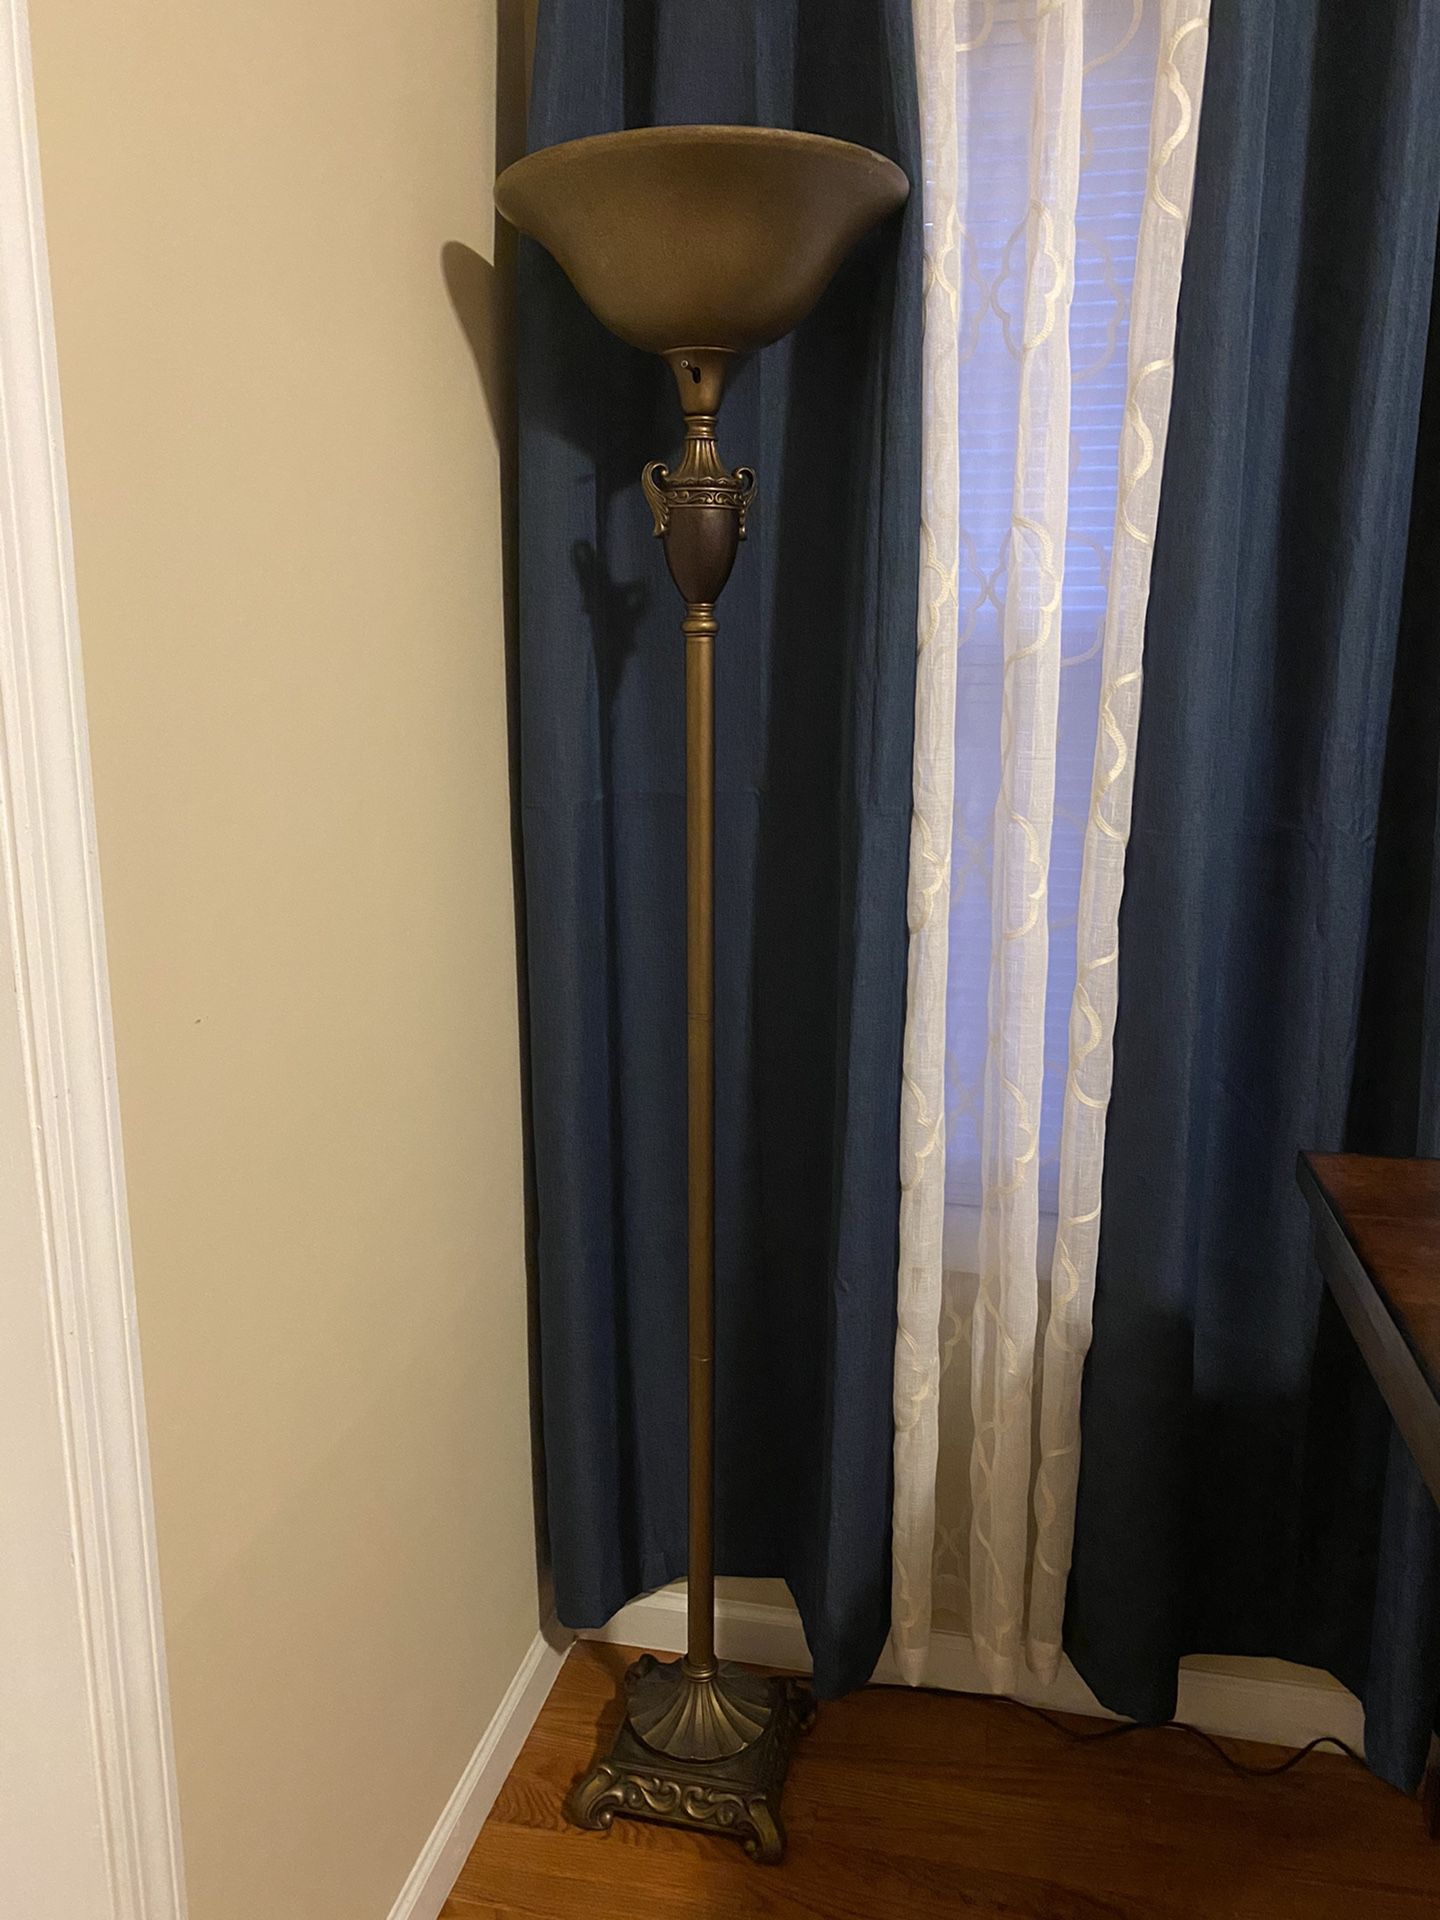 FLOOR LAMP FOR SALE